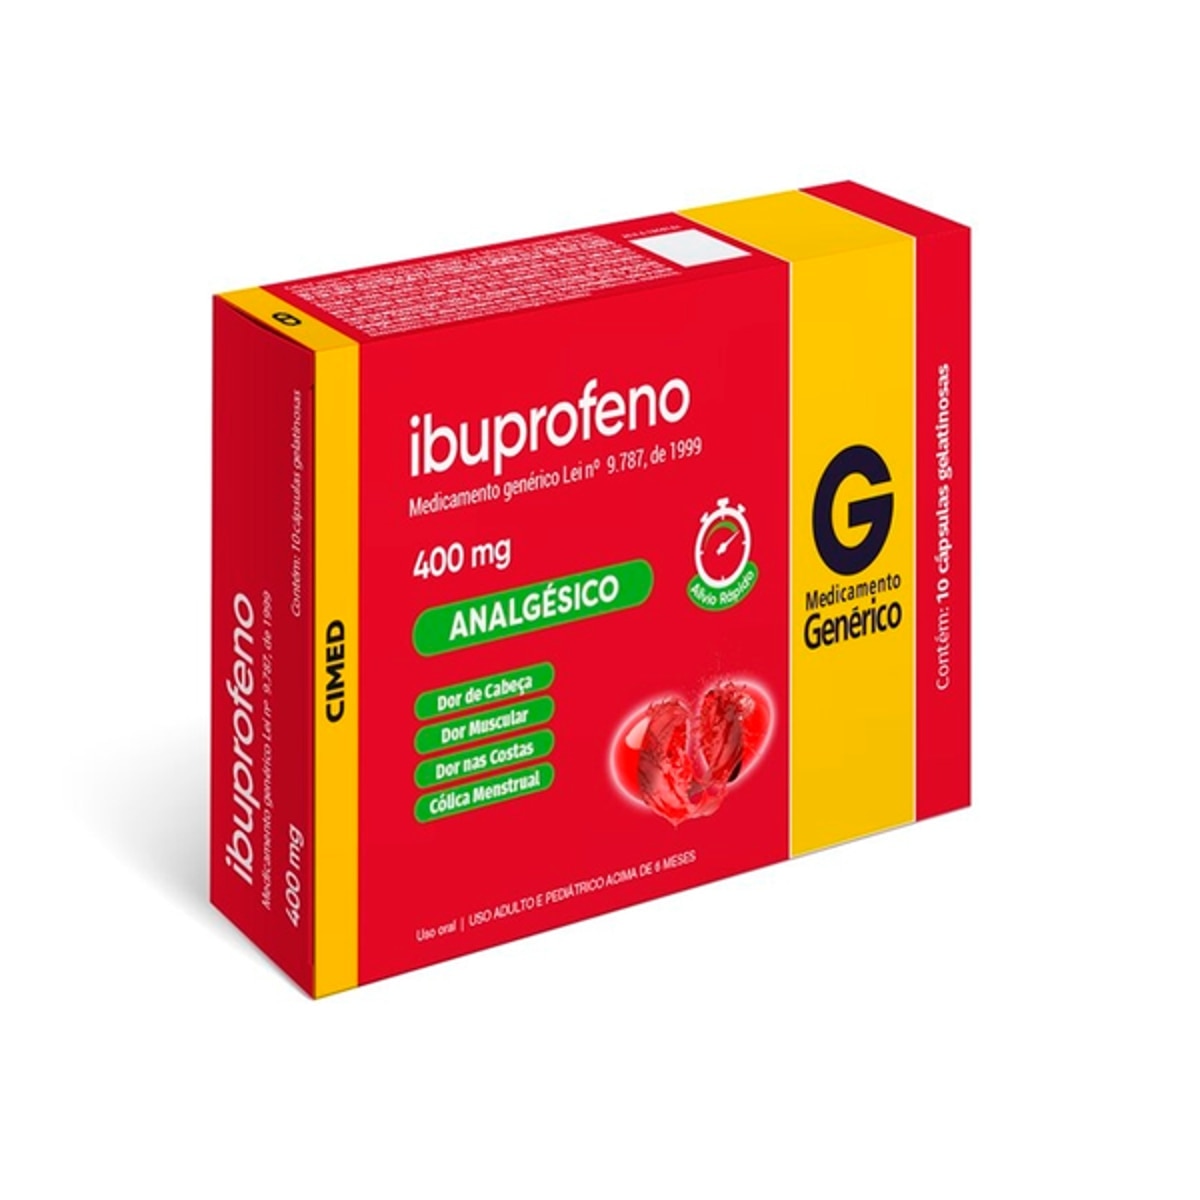 Ibuprofeno 400mg 10 Capsulas Cimed Generico